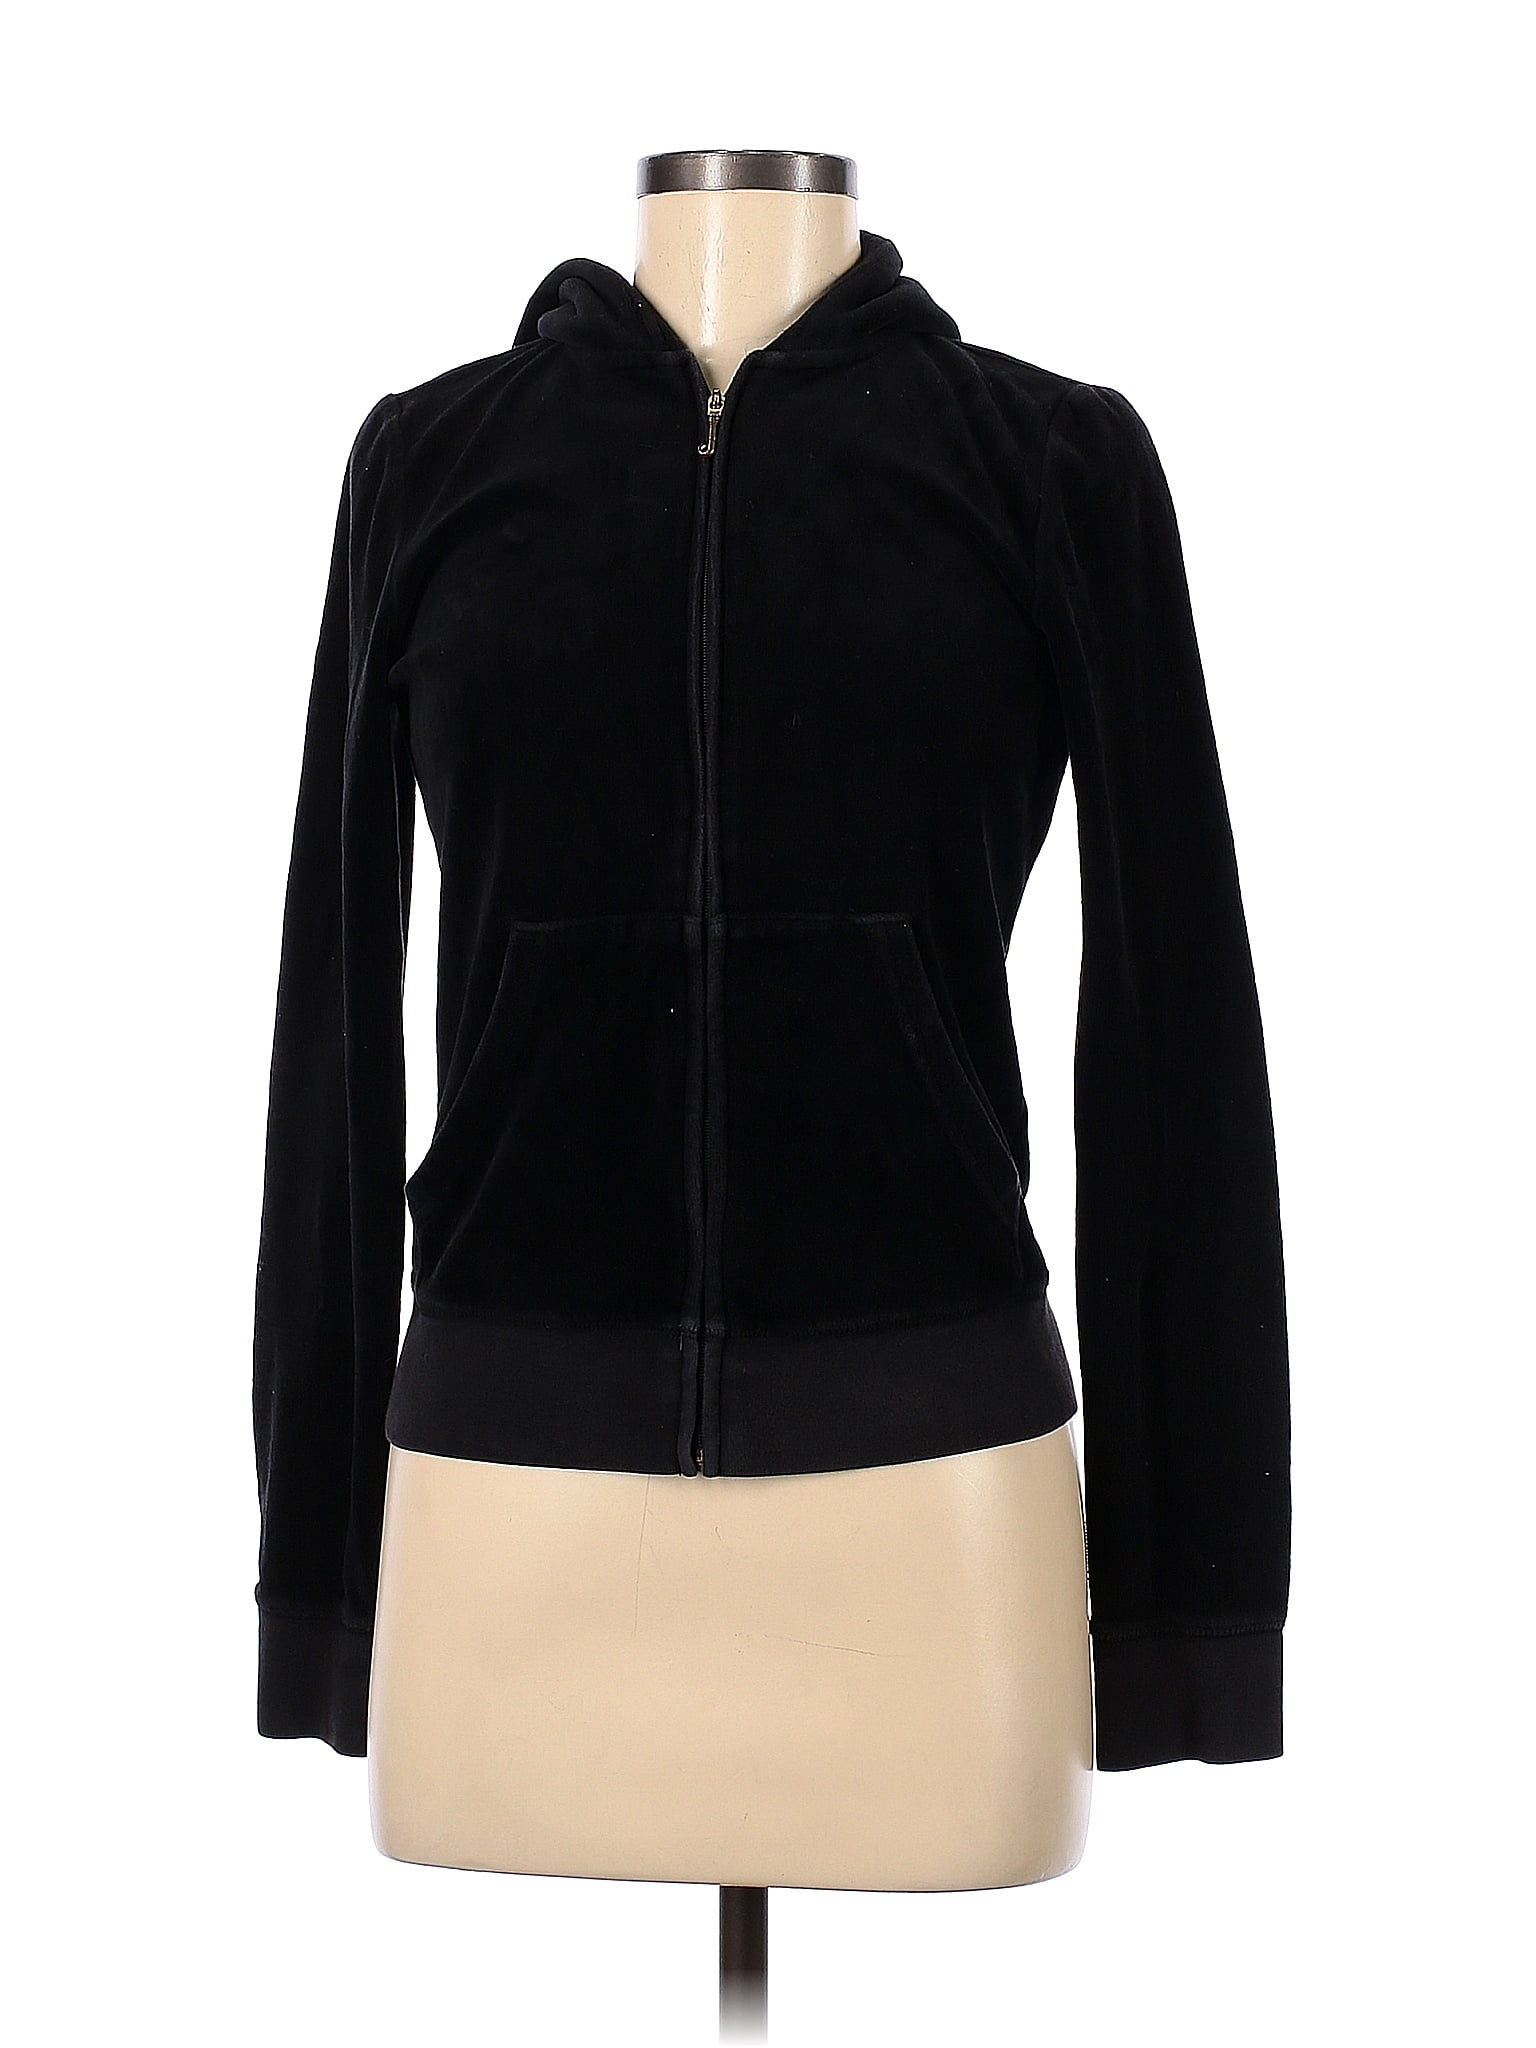 Juicy Couture Solid Black Zip Up Hoodie Size M - 74% off | thredUP